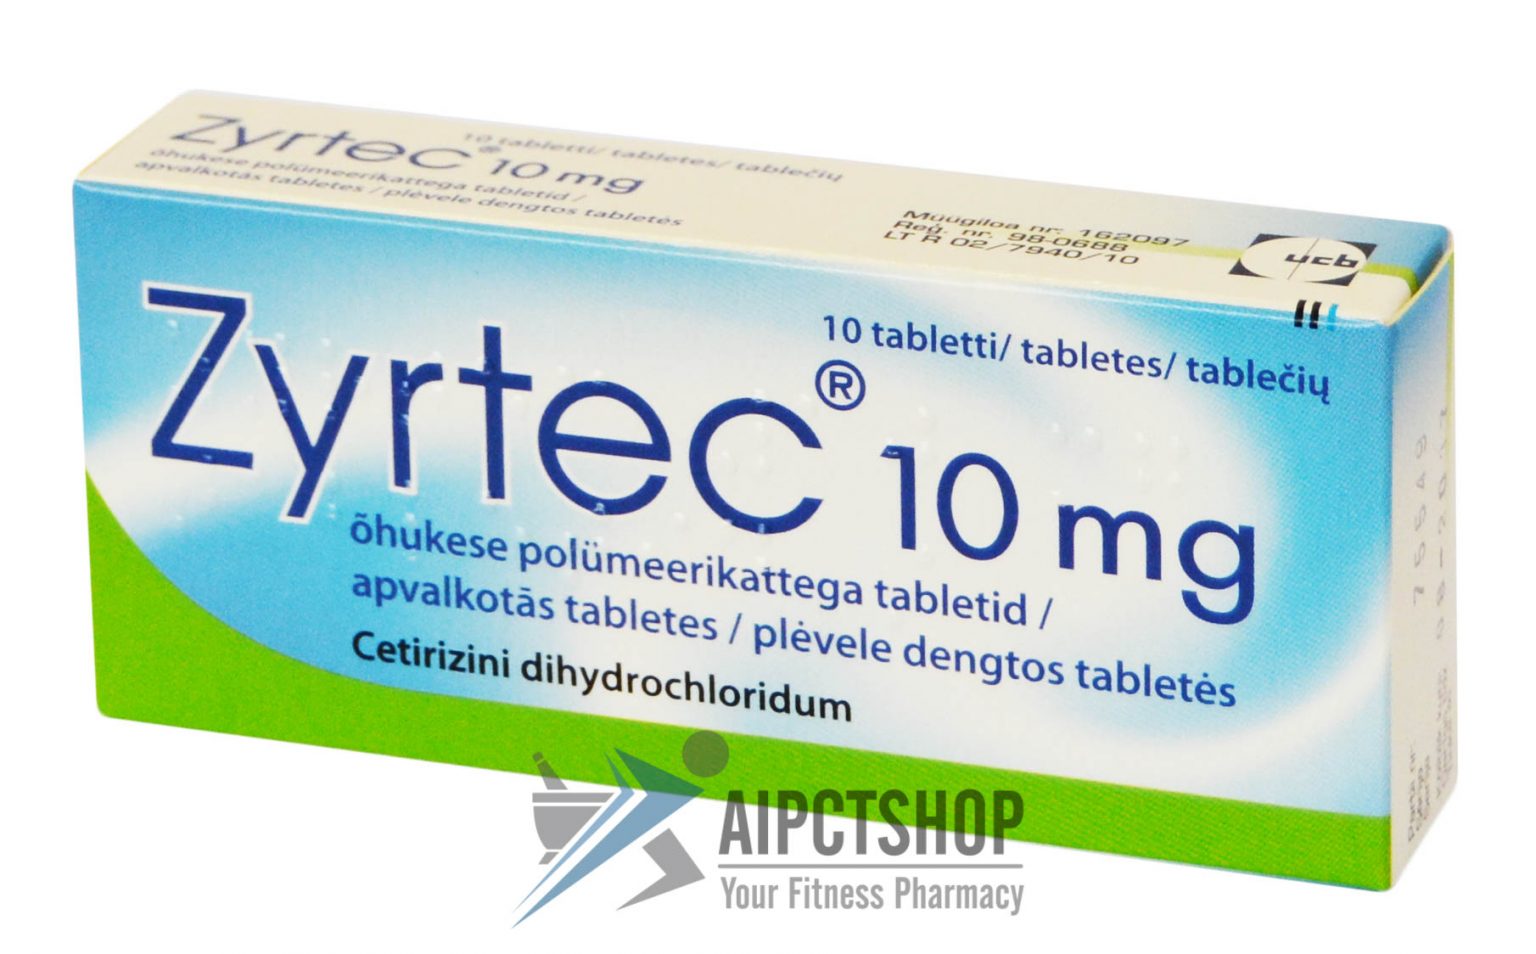 buy-zyrtec-cetirizine-10-mg-250-tablets-online-aipctshop